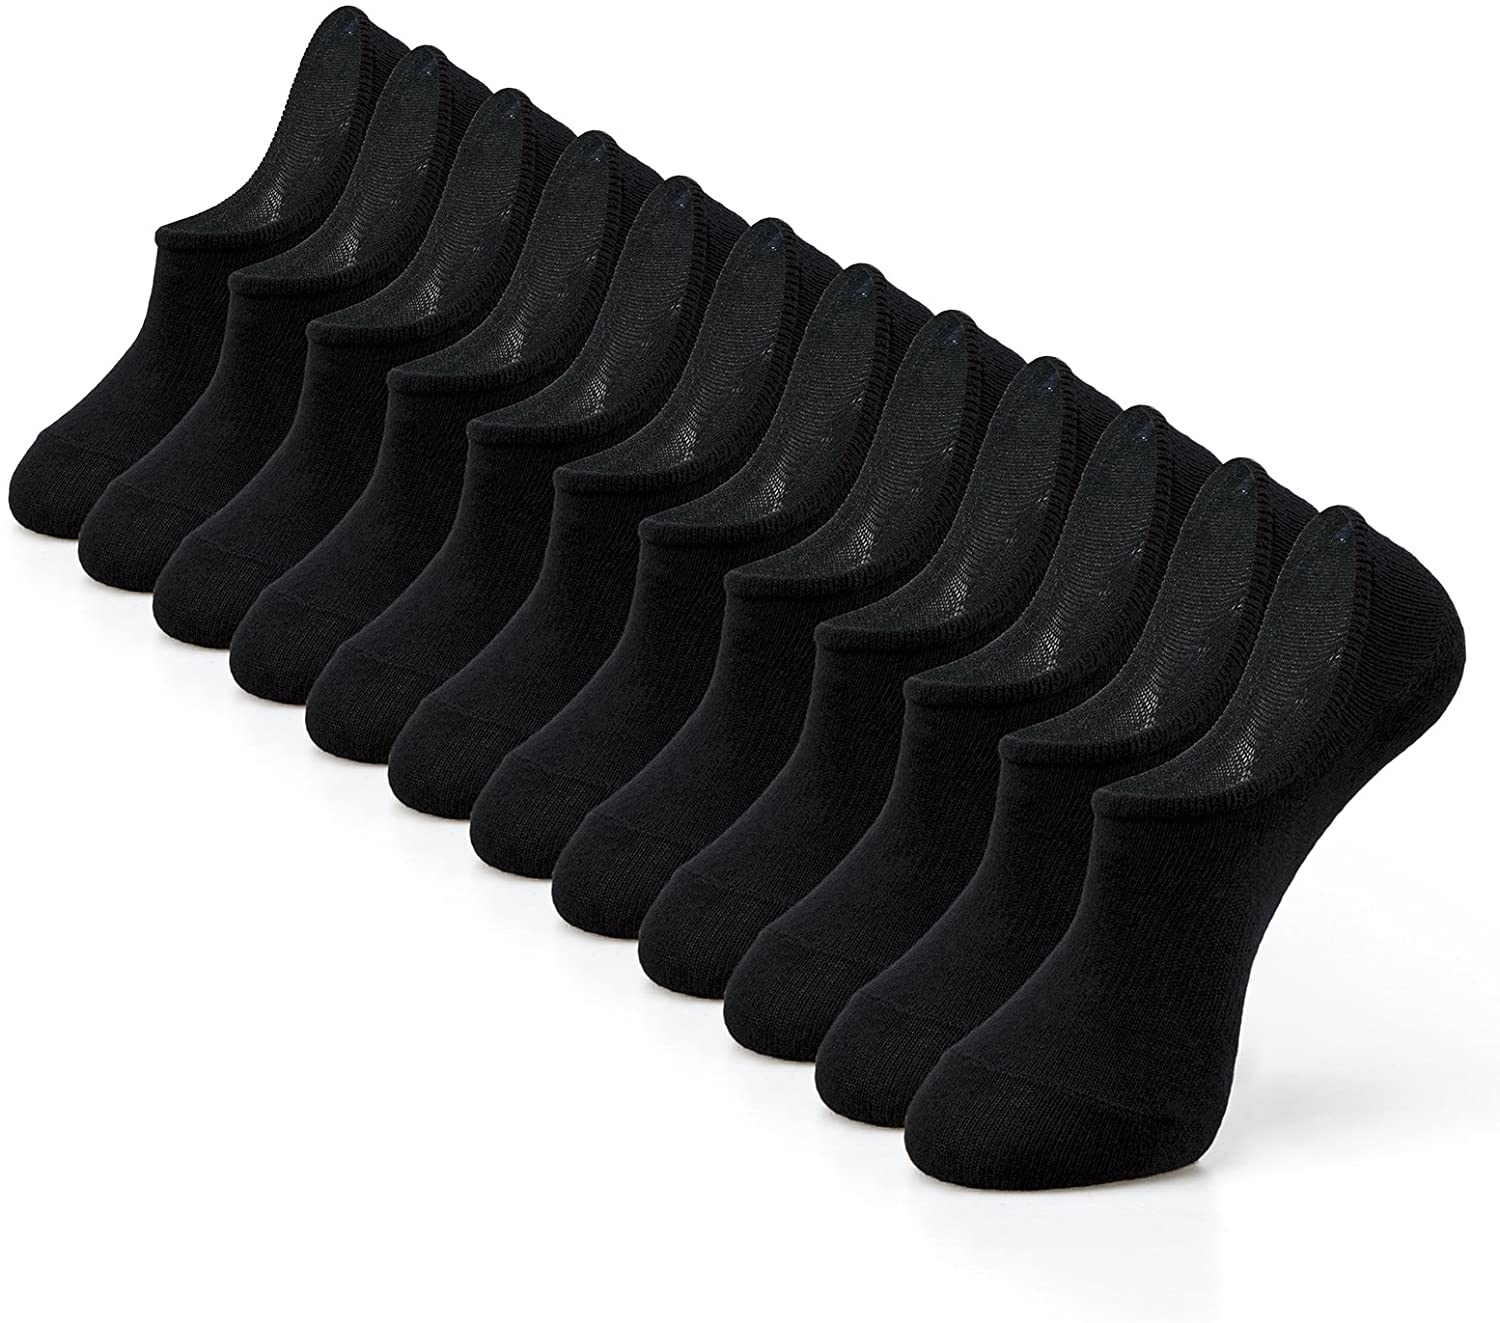 IDEGG Mens Cotton Casual Low Cut Anti-slid Athletic Socks 